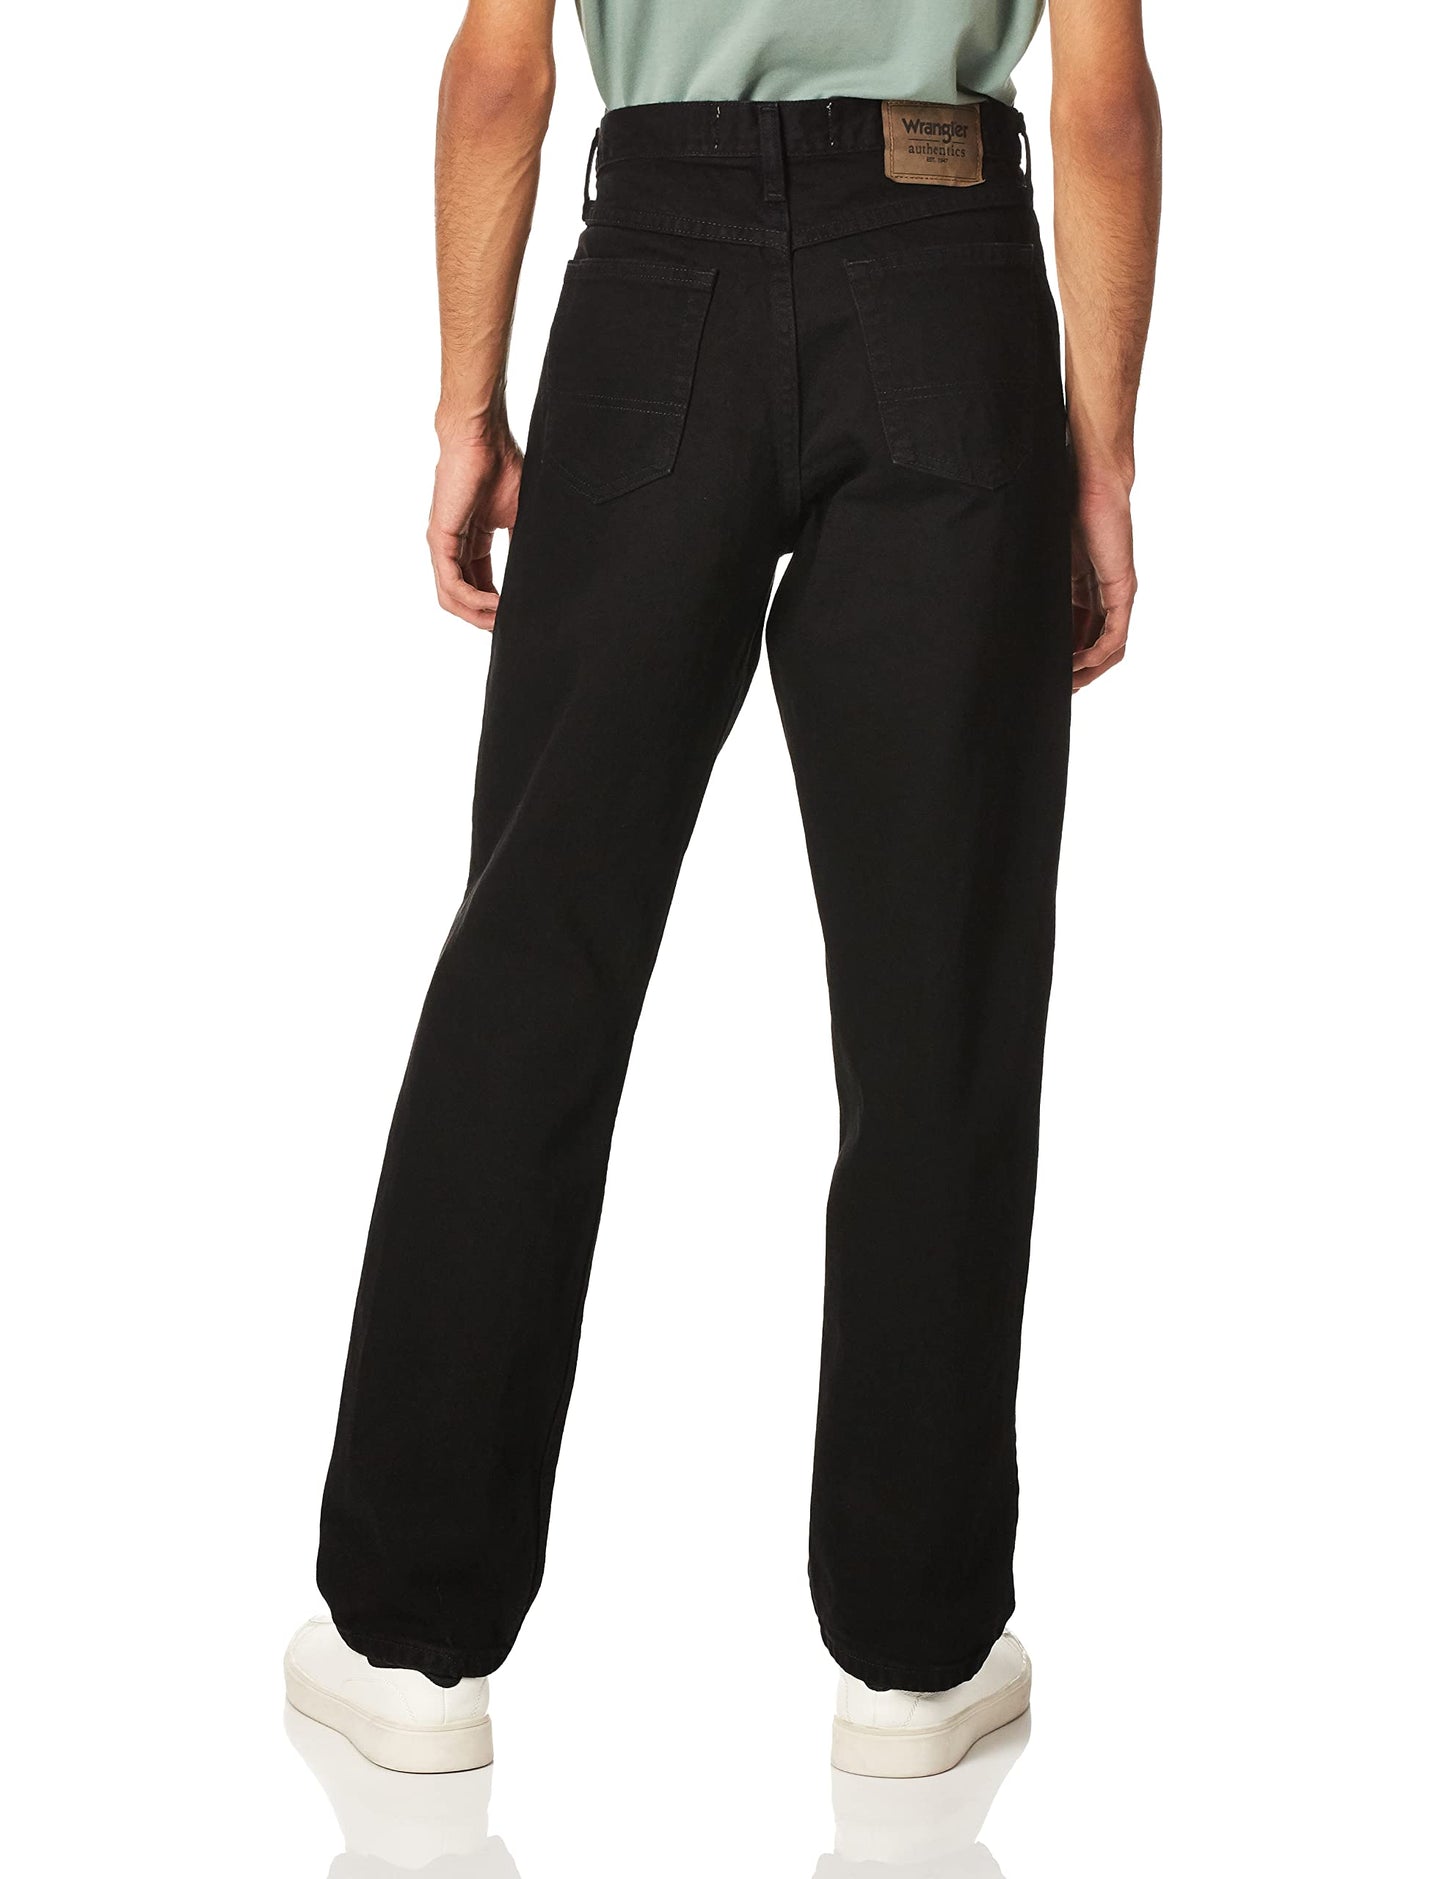 Wrangler Authentics Men's Big & Tall Classic 5-Pocket Relaxed Fit Cotton Jean, Black, 54W x 32L